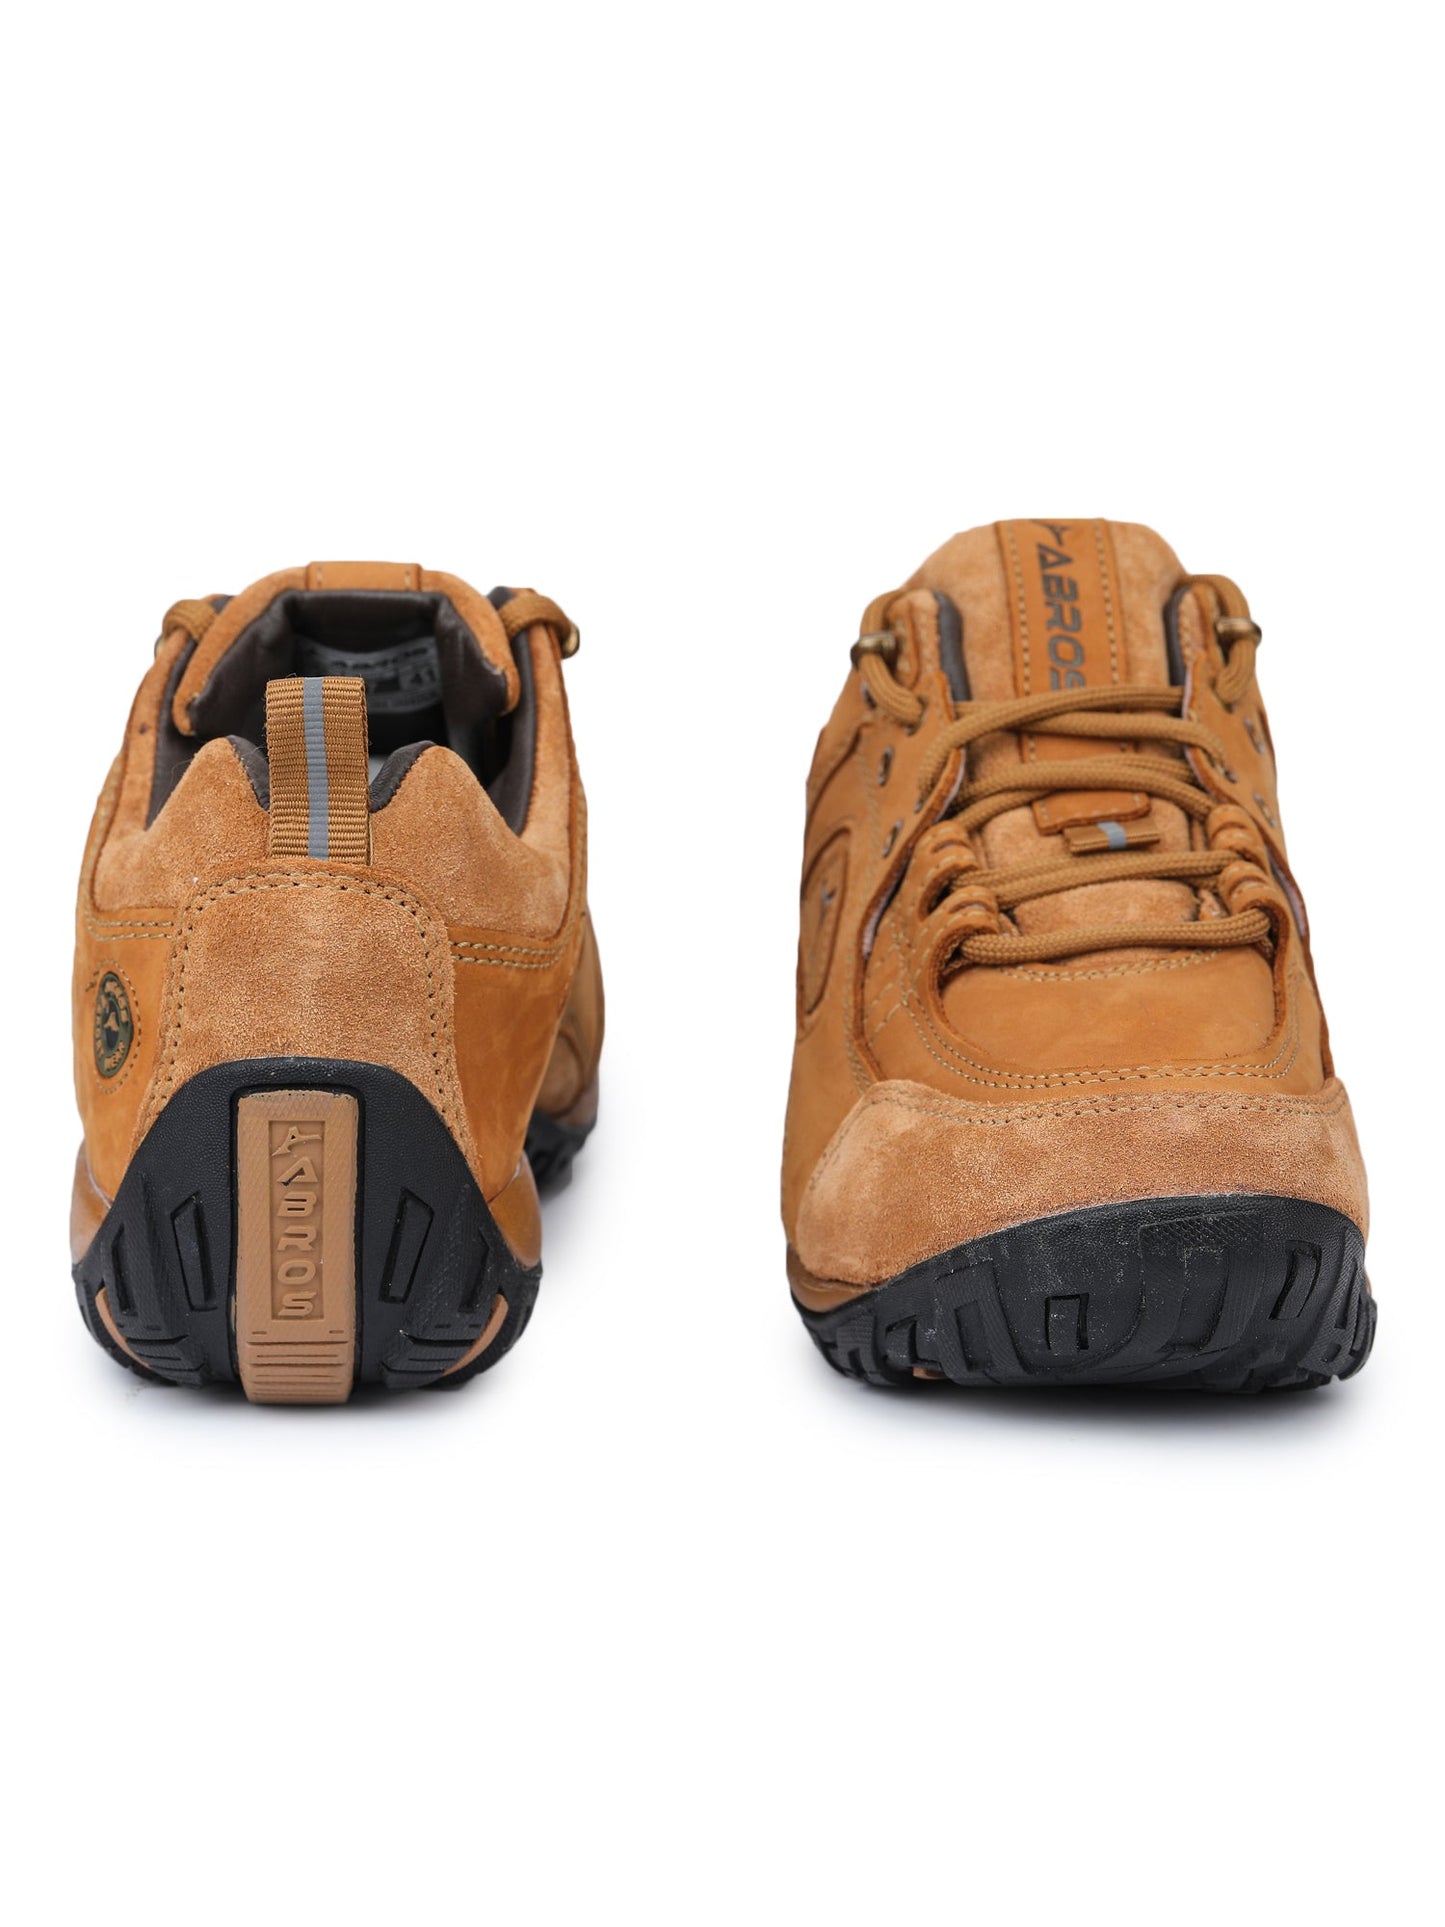 Howardo Outdoor-Shoes For Men's